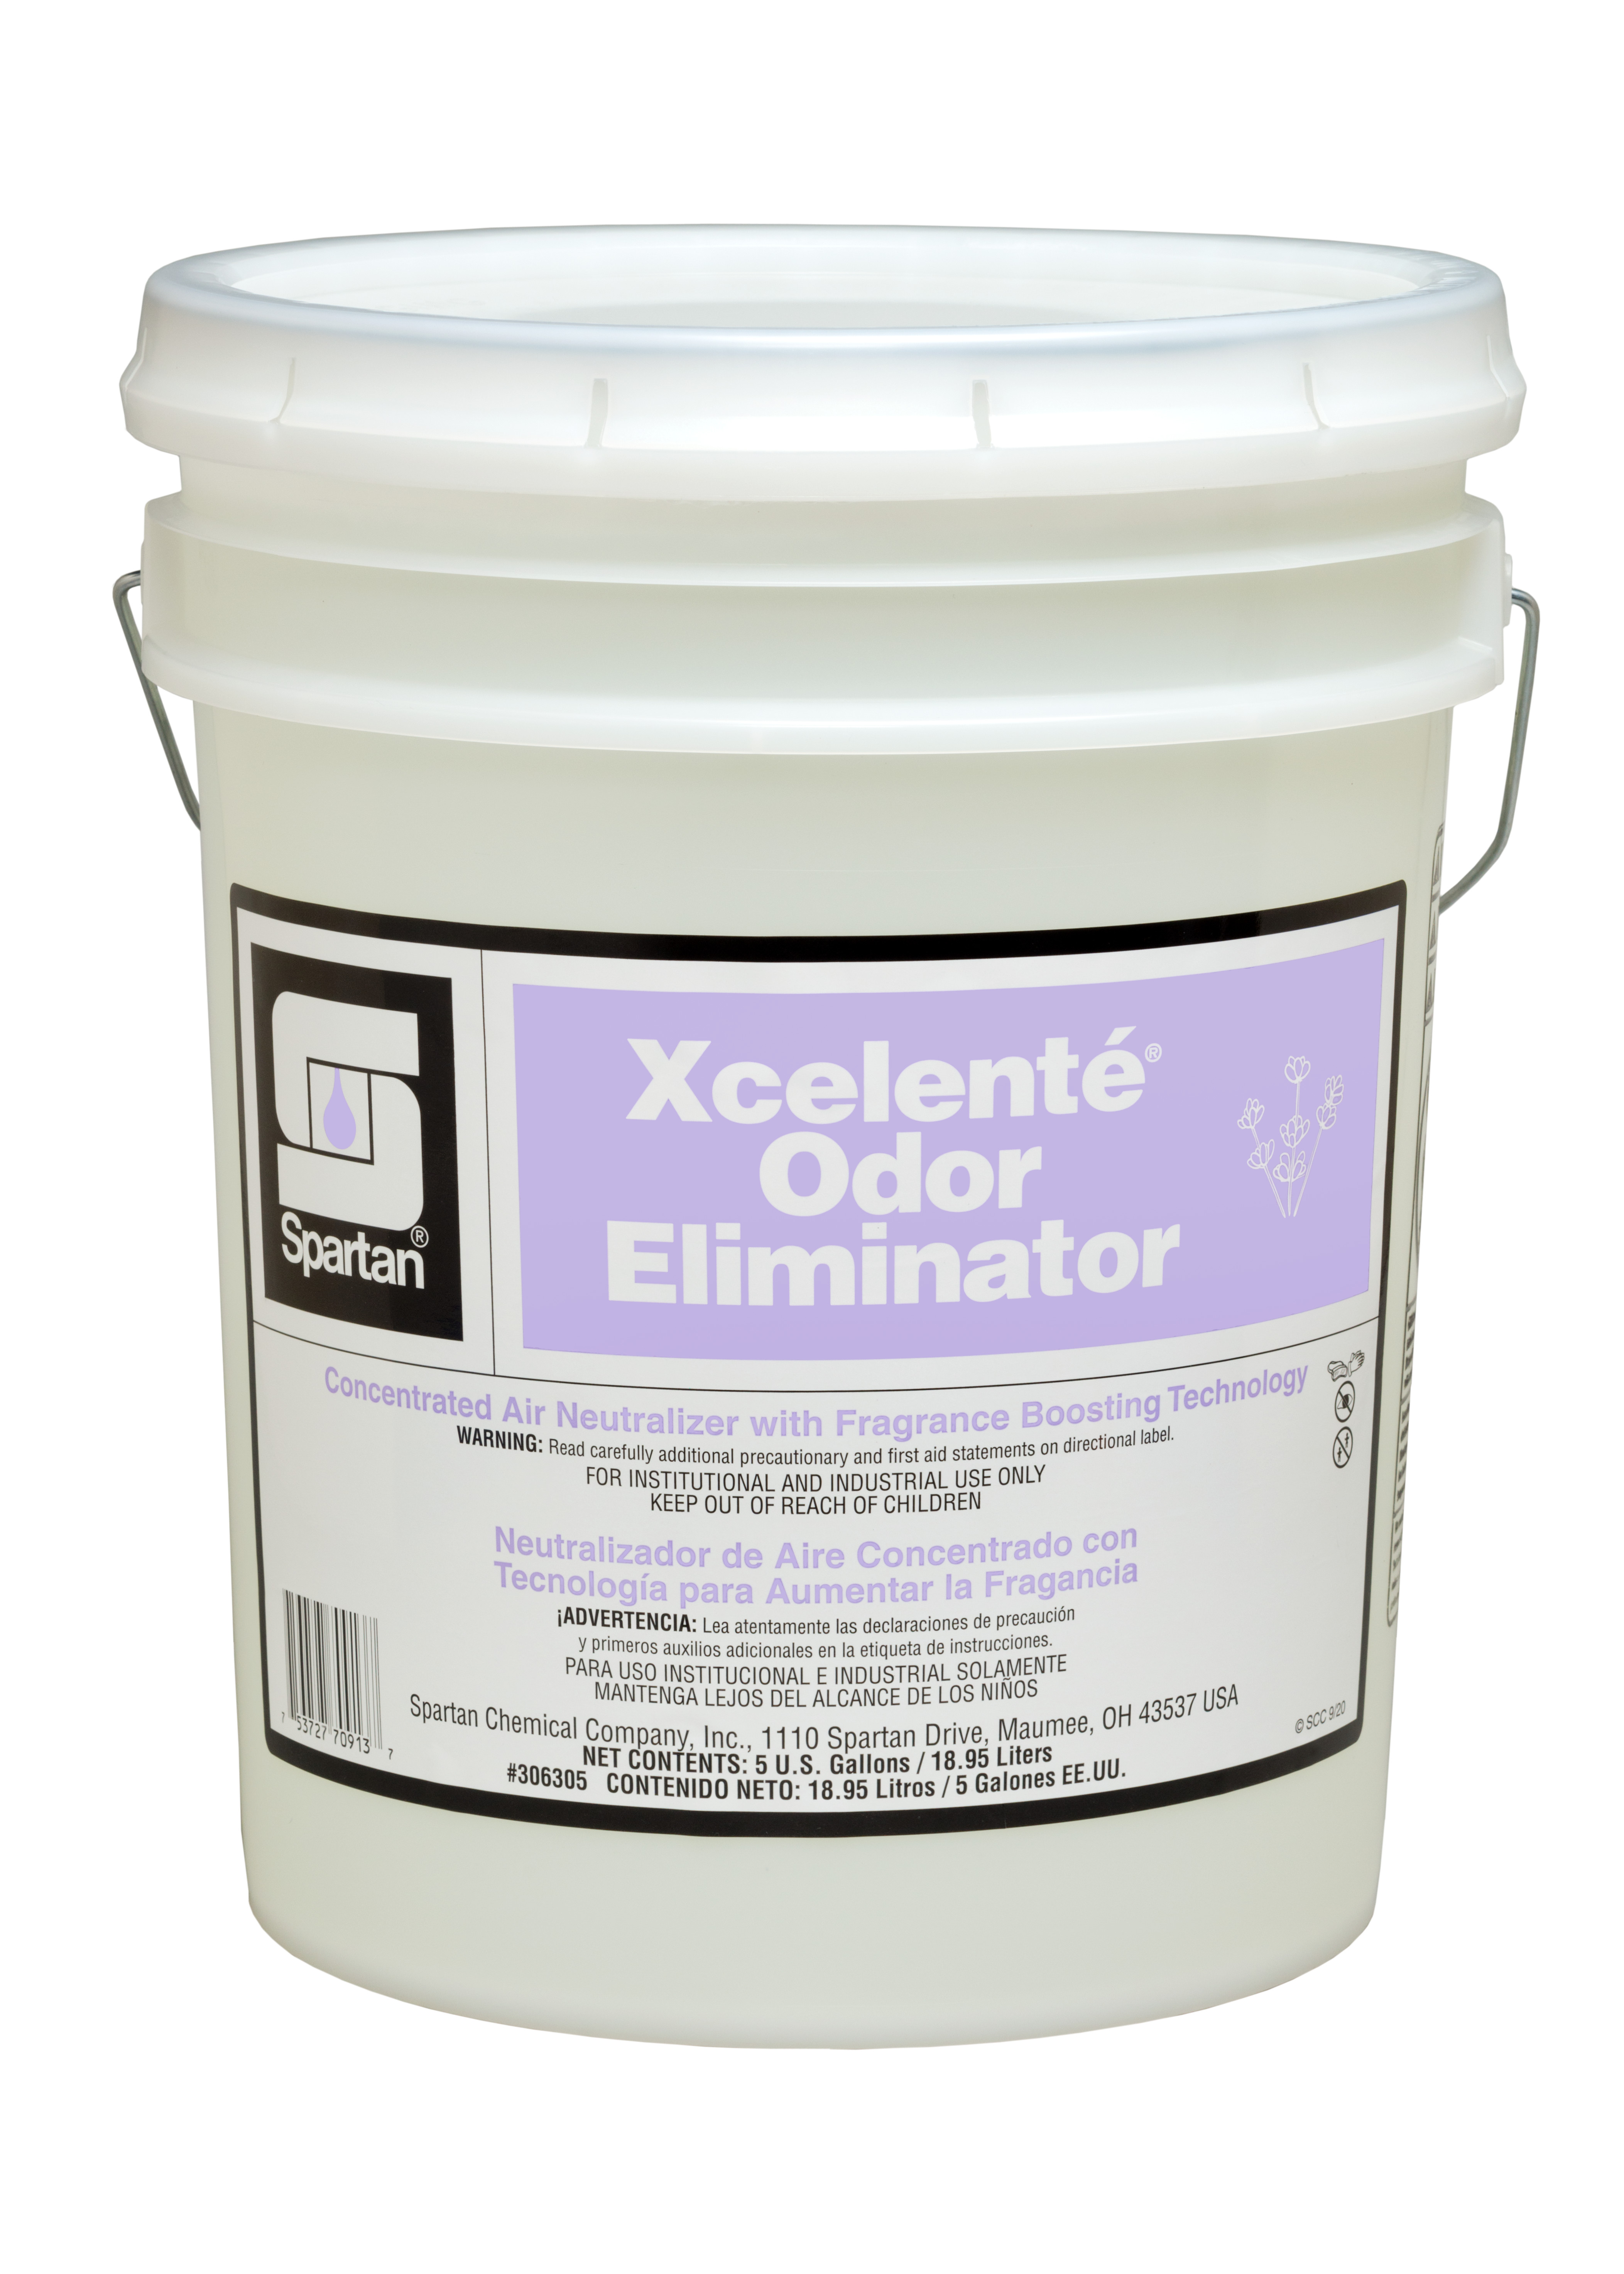 Spartan Chemical Company Xcelente Odor Eliminator, 5 gallon pail